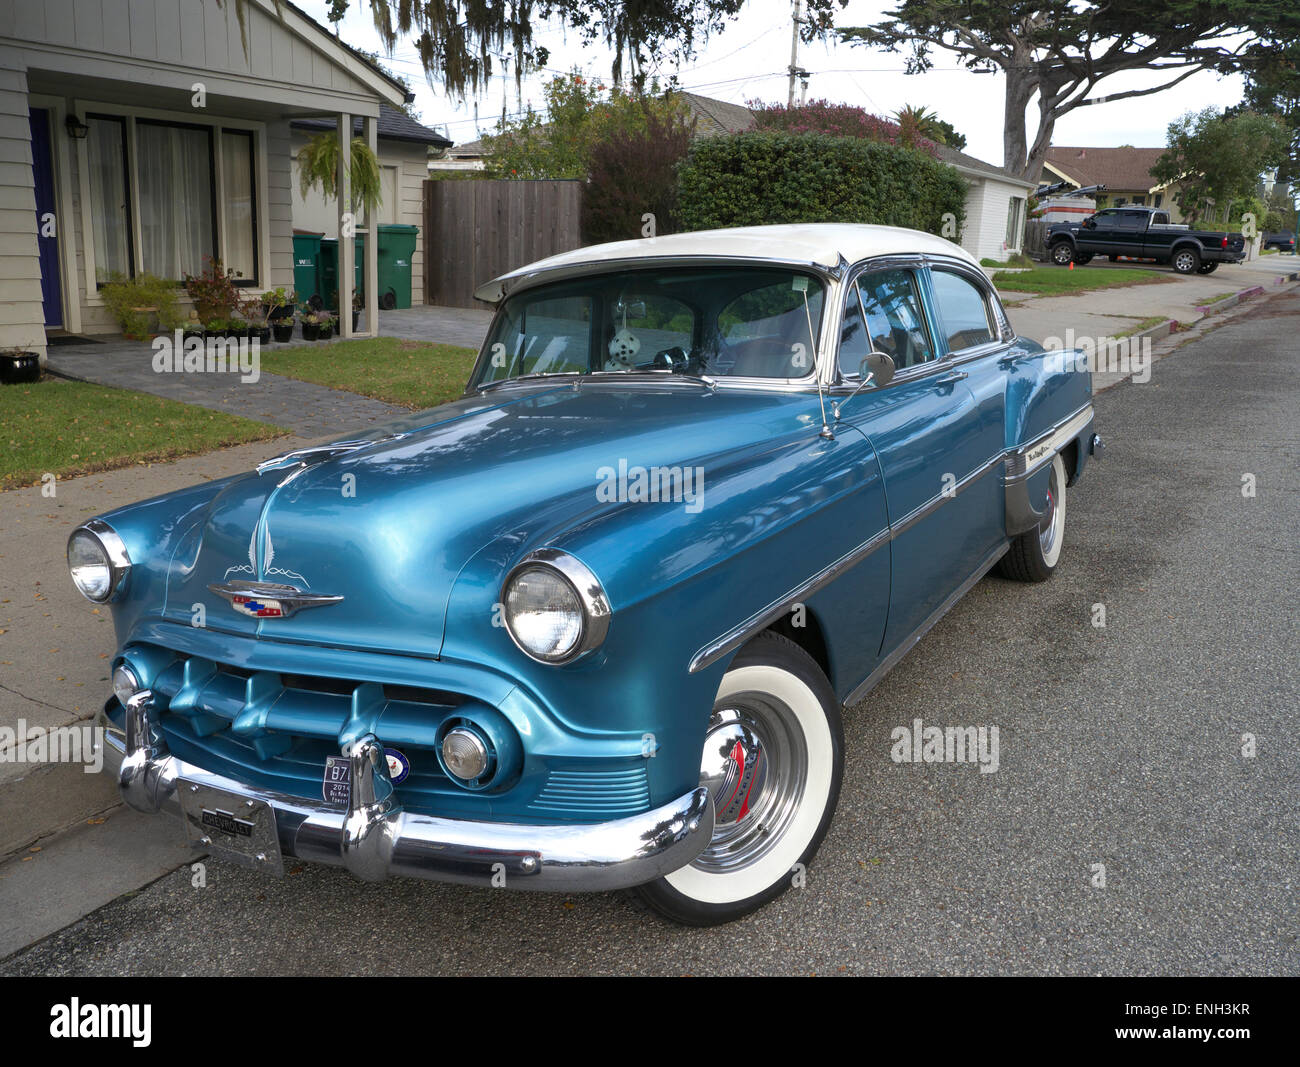 1954 Chevrolet BelAir klassische amerikanische Automobil Pacific Grove Monterey Kalifornien USA Stockfoto